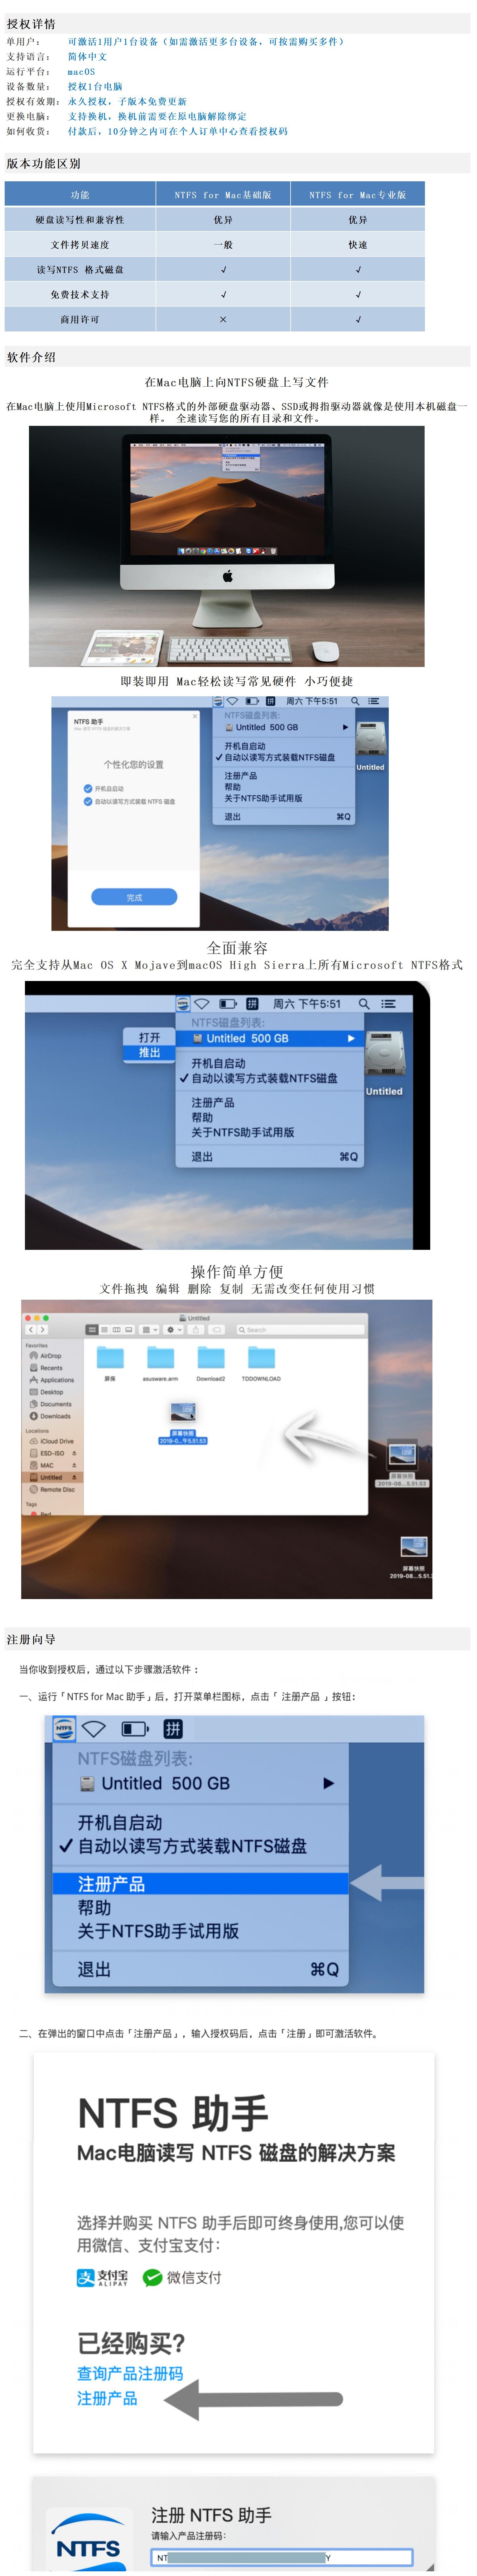 赤友NTFS for Mac助手使用方法